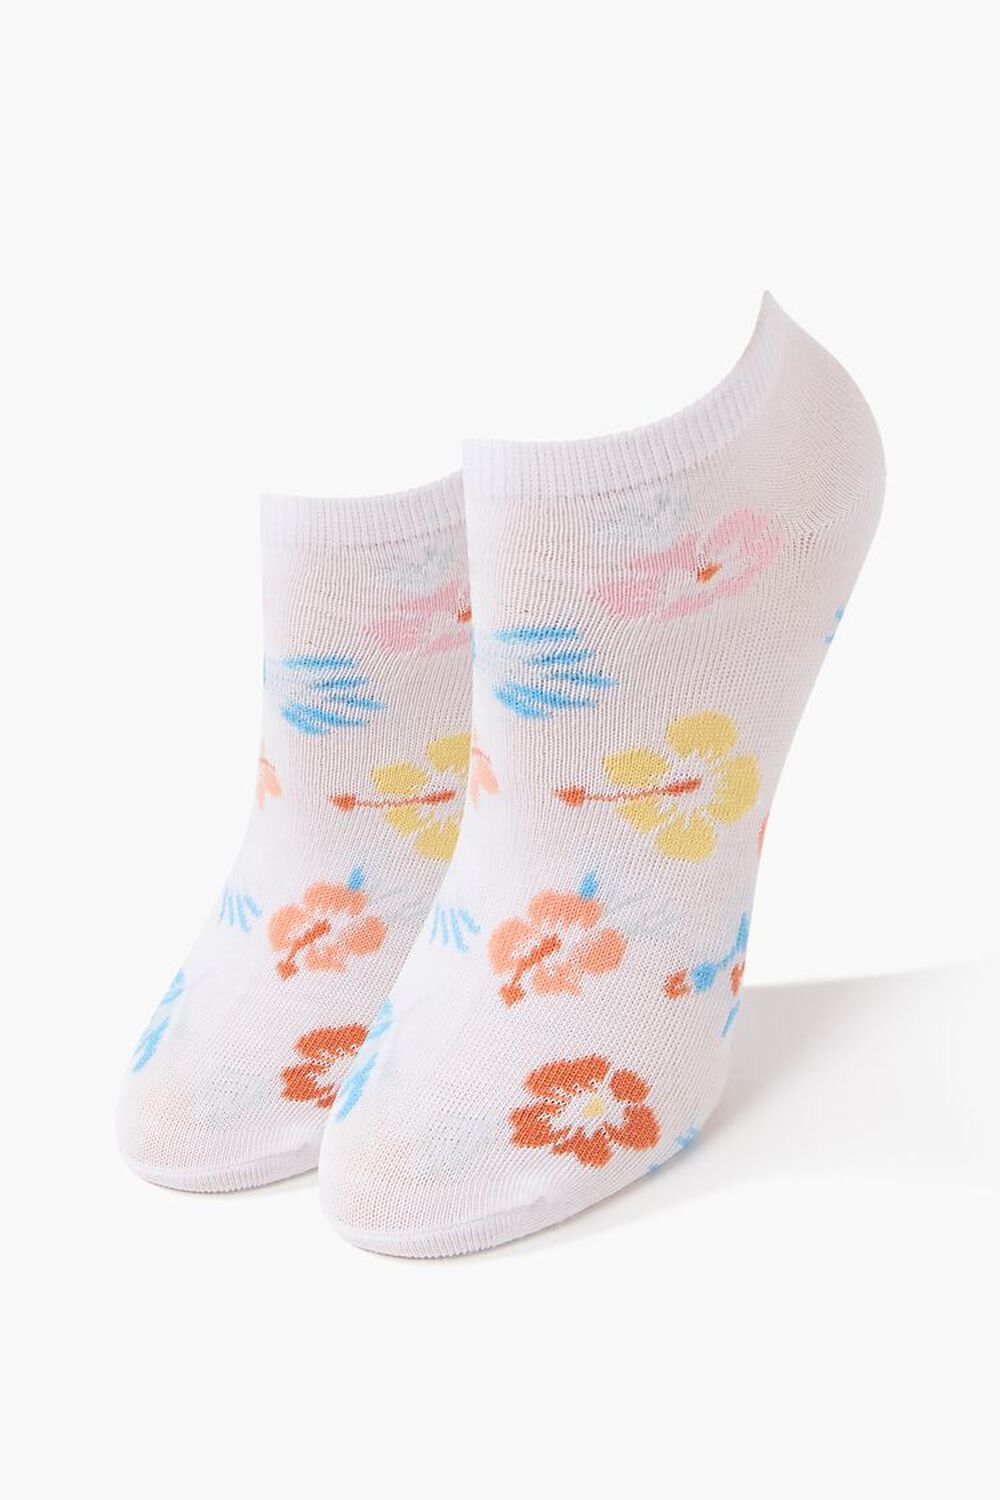 Tropical Floral Print Ankle Socks, image 1